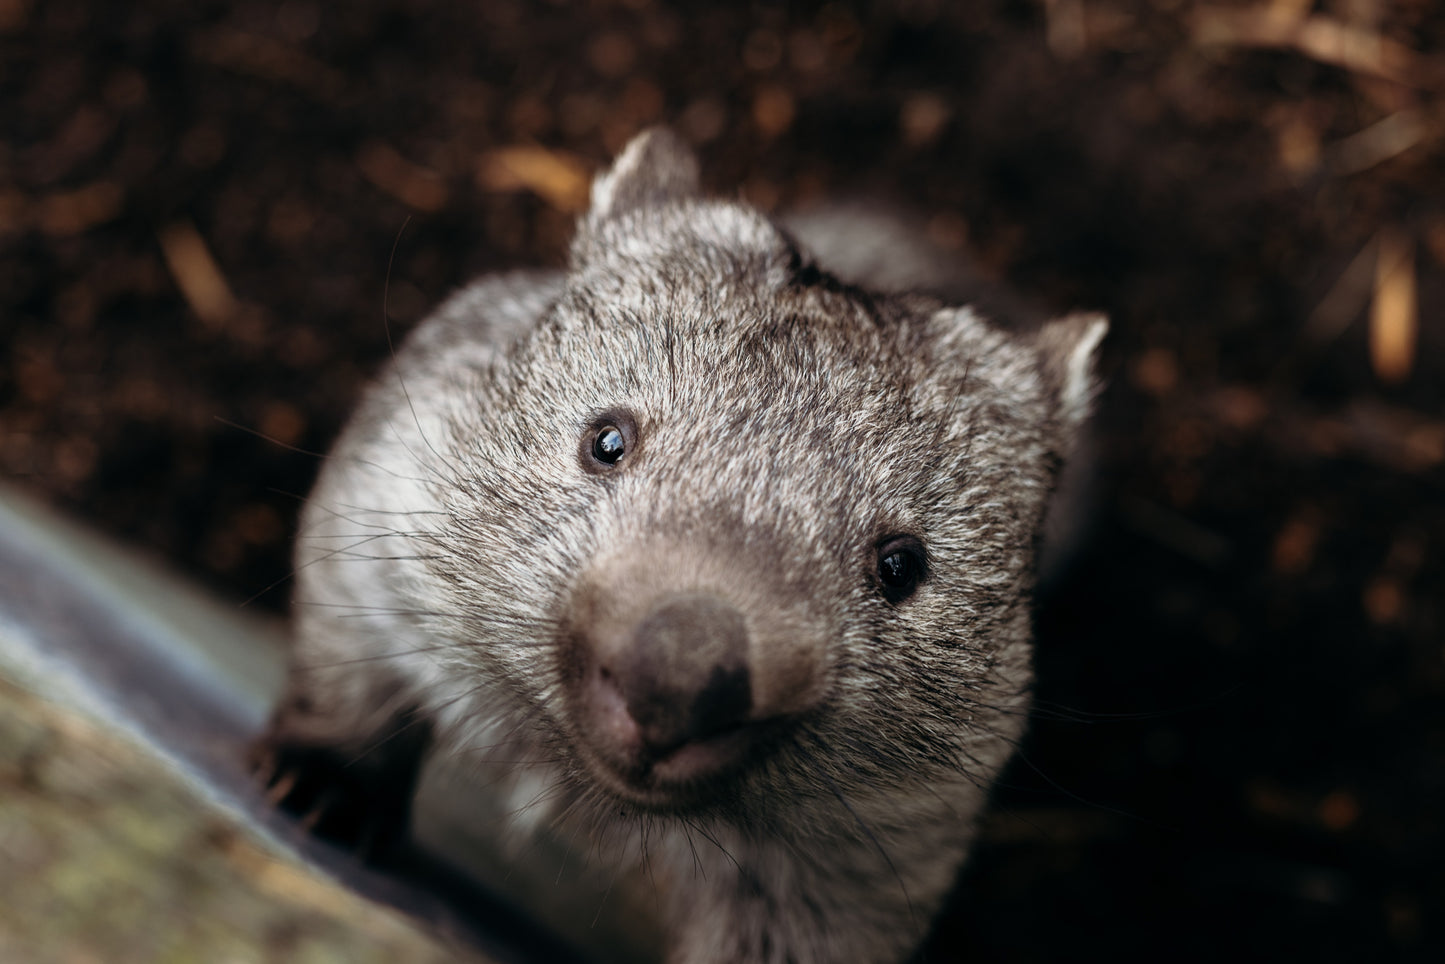 range Tasmania greeting card image of a wombat at Bonorong wildlife sanctuary Tasmania